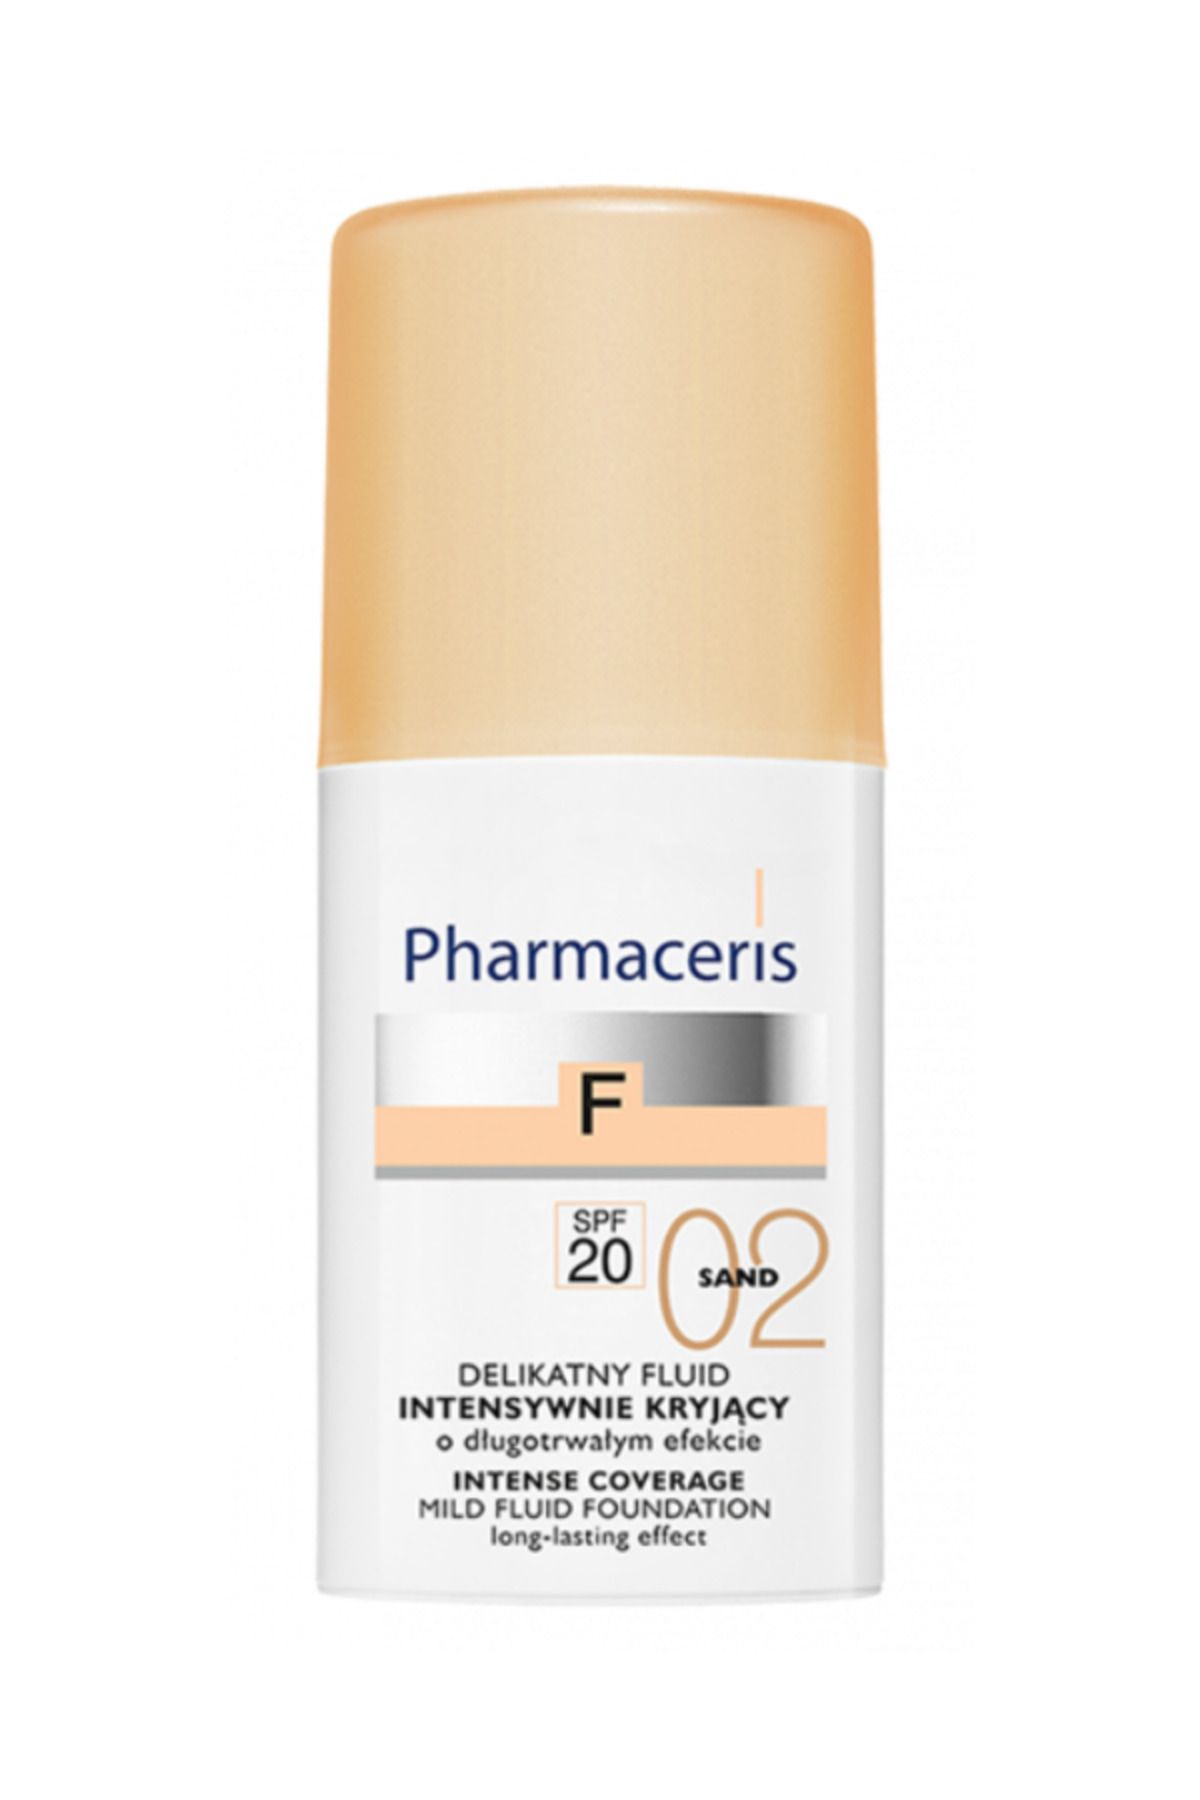 Pharmaceris Yoğun Kapatıcı Yumuşak Sıvı Fondöten (30 ml) Intense Coverage Mild F. F. SPF 20/02